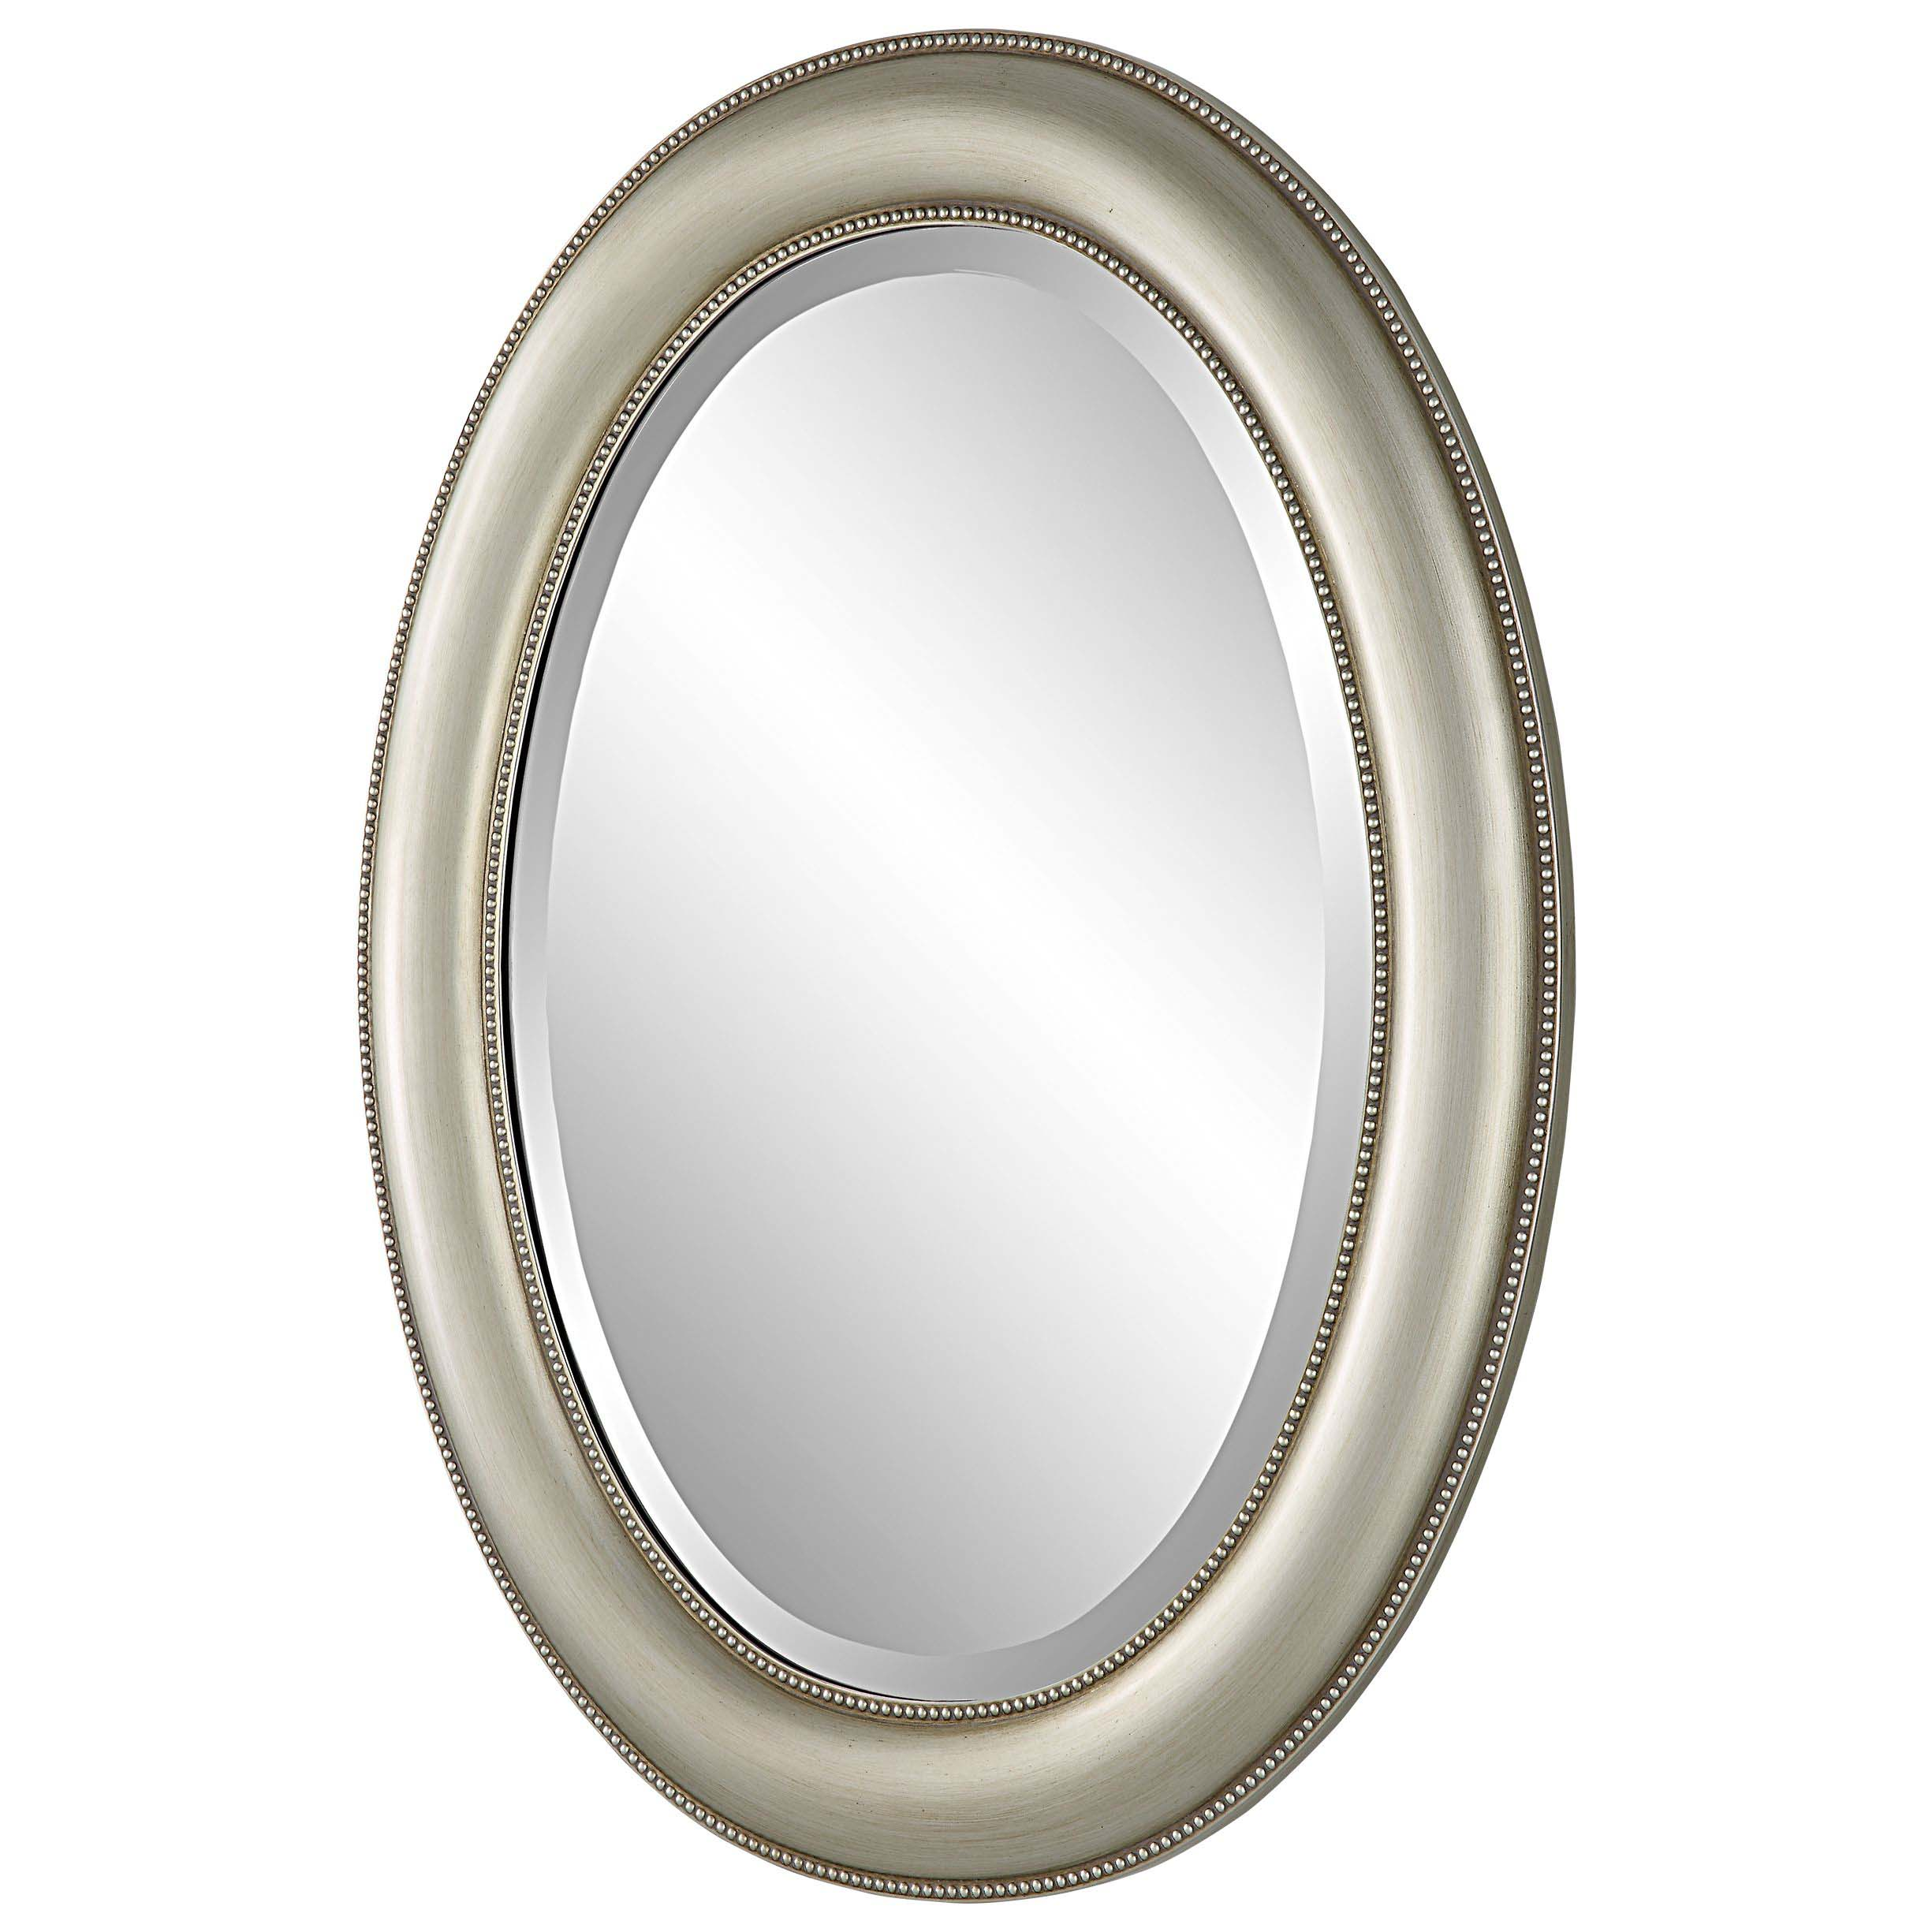 Decor Market Mirror - Metallic Silver Finish